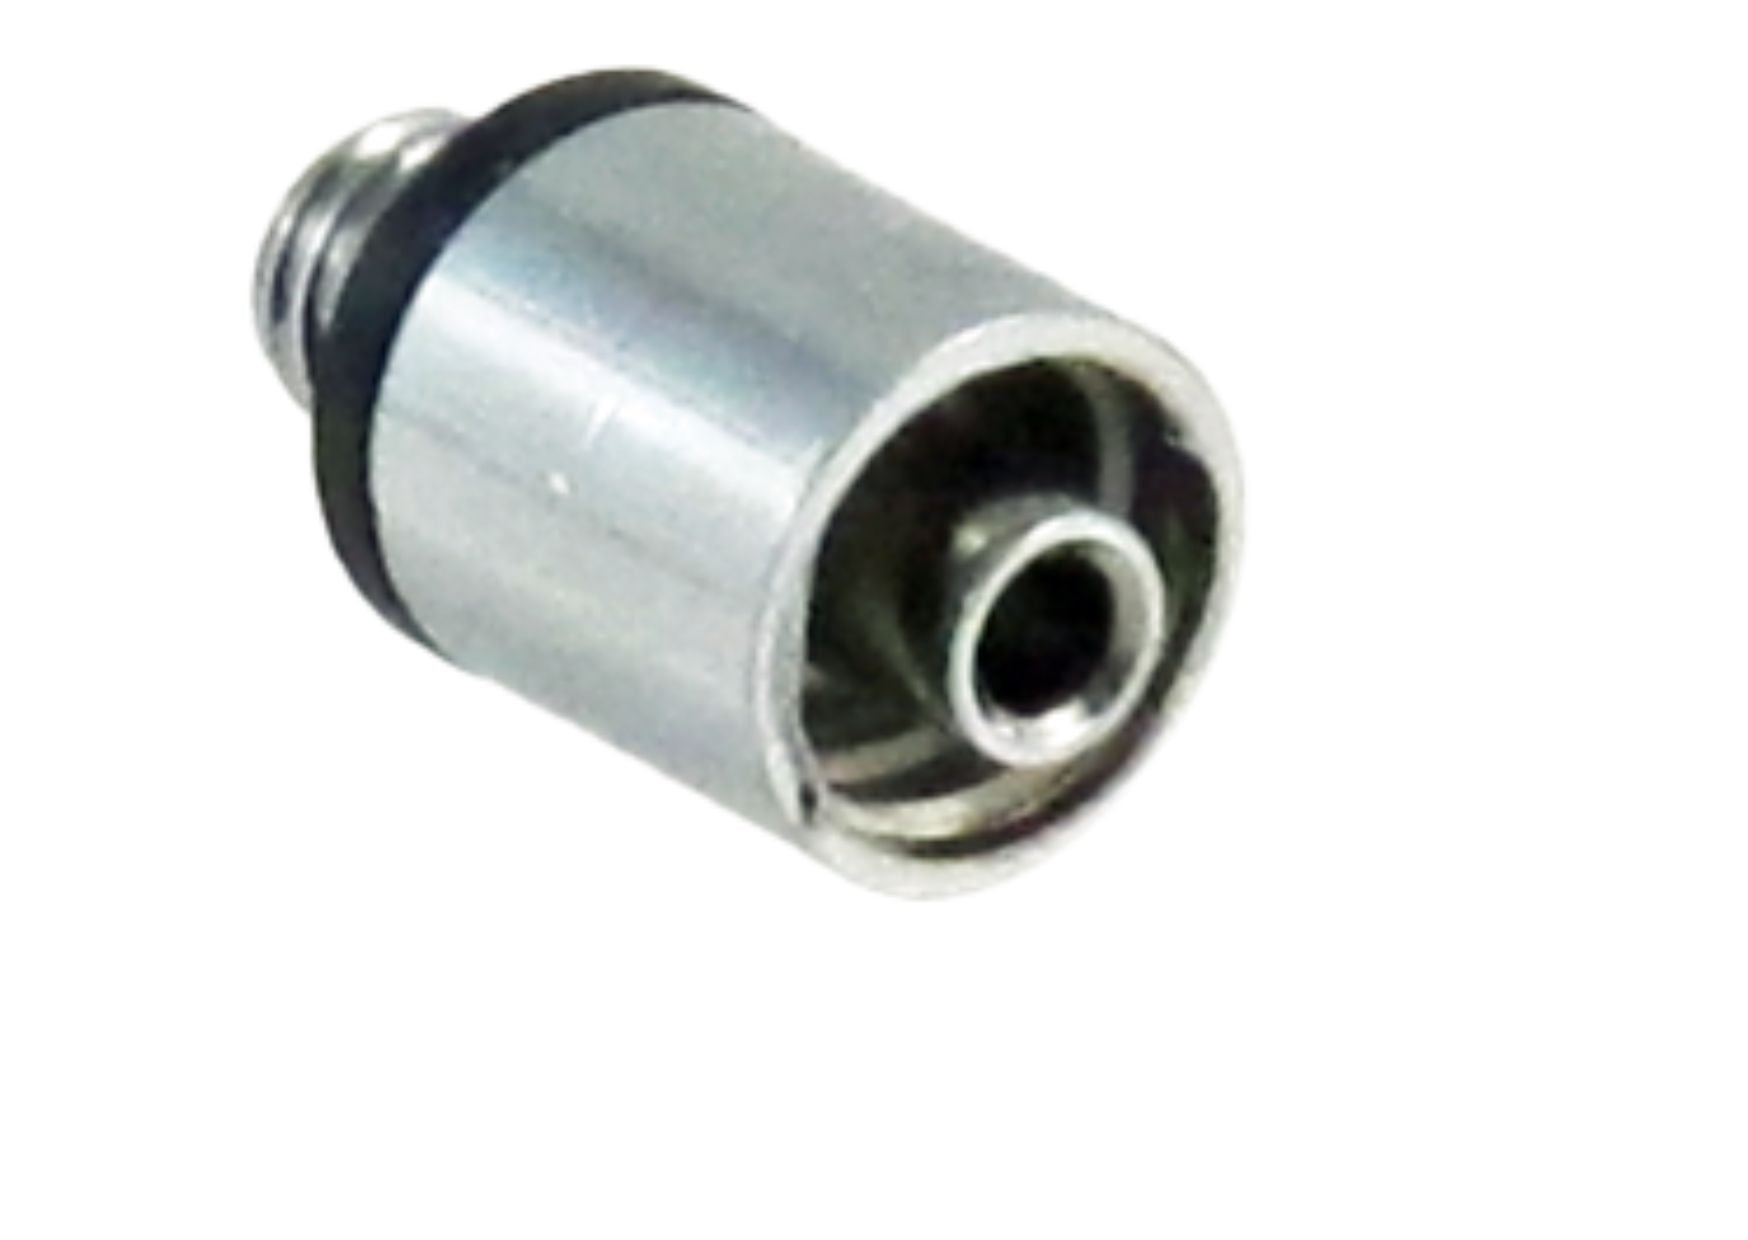 Luer lock adapter, 12-32 thread, male